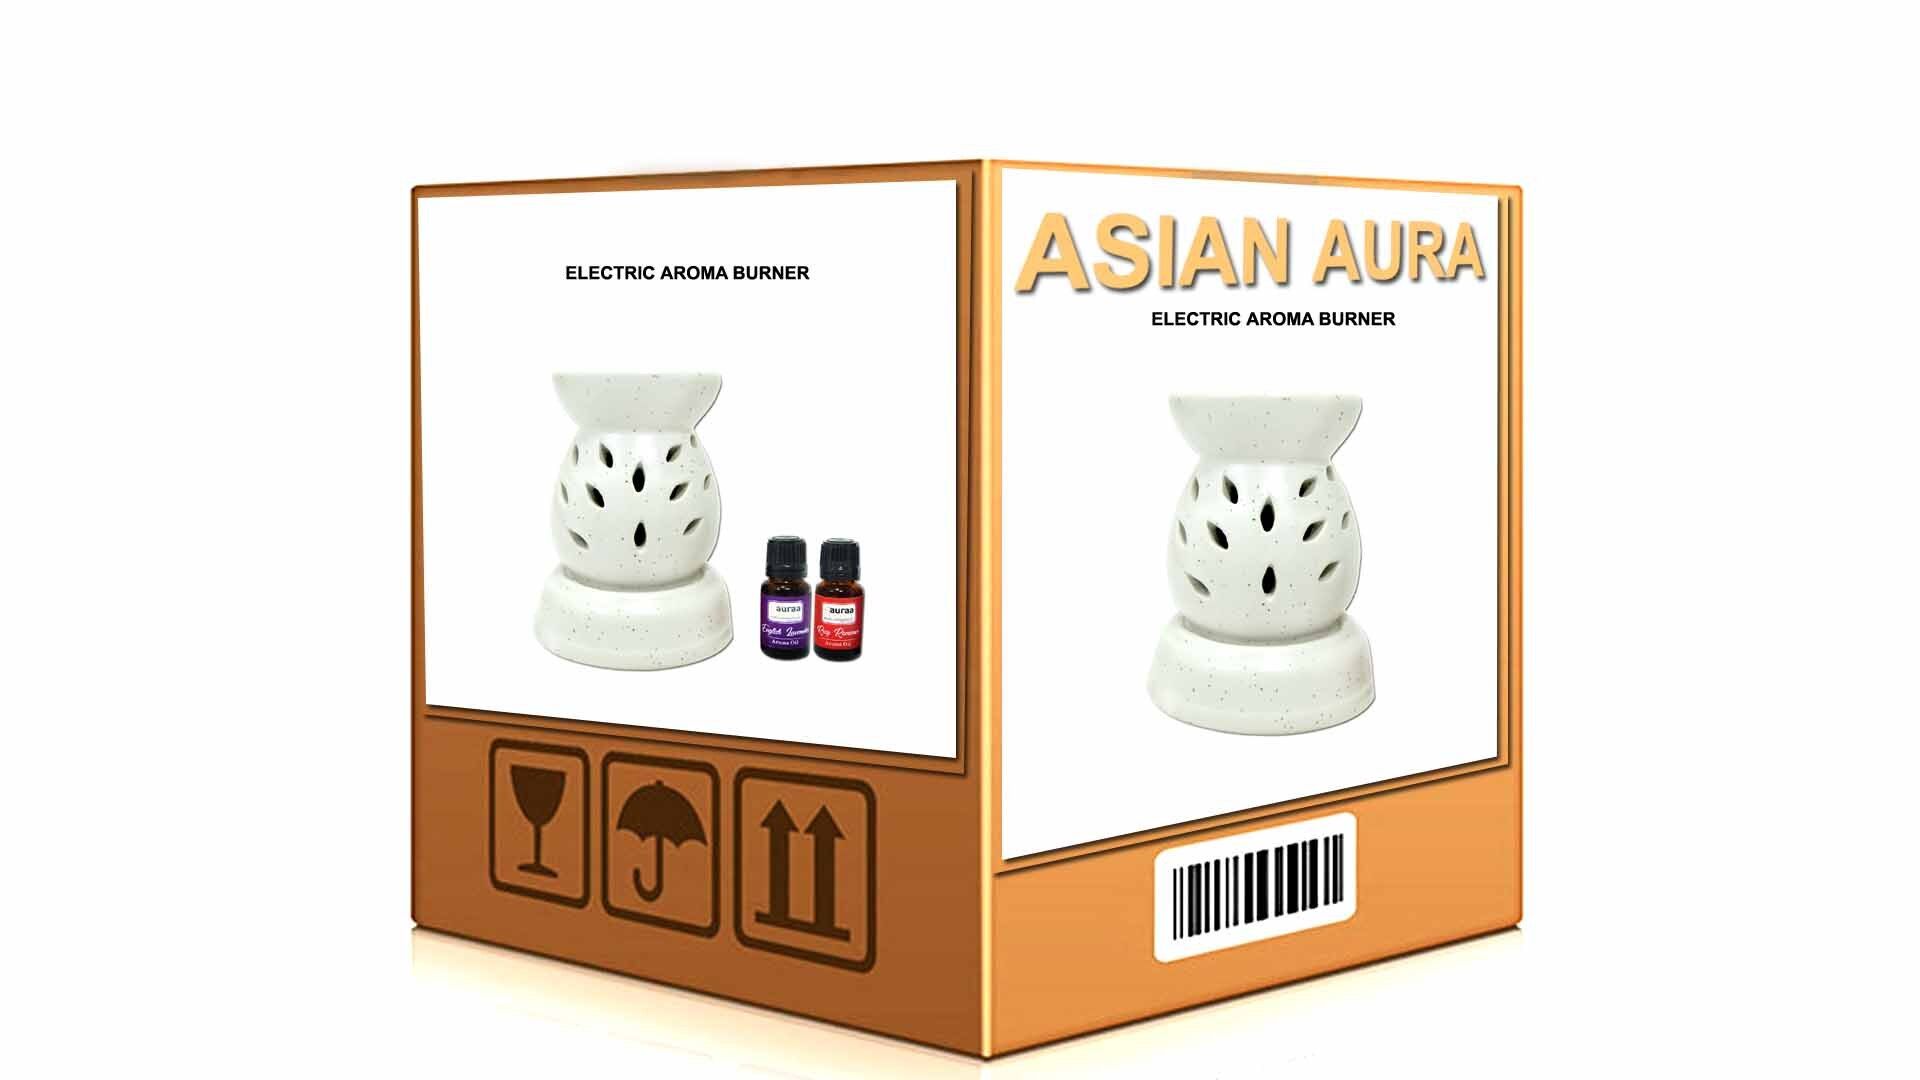 Asian Aura Ceramic Aromatic Oil Diffuser with 2 oil bottles AAEB 0013-W